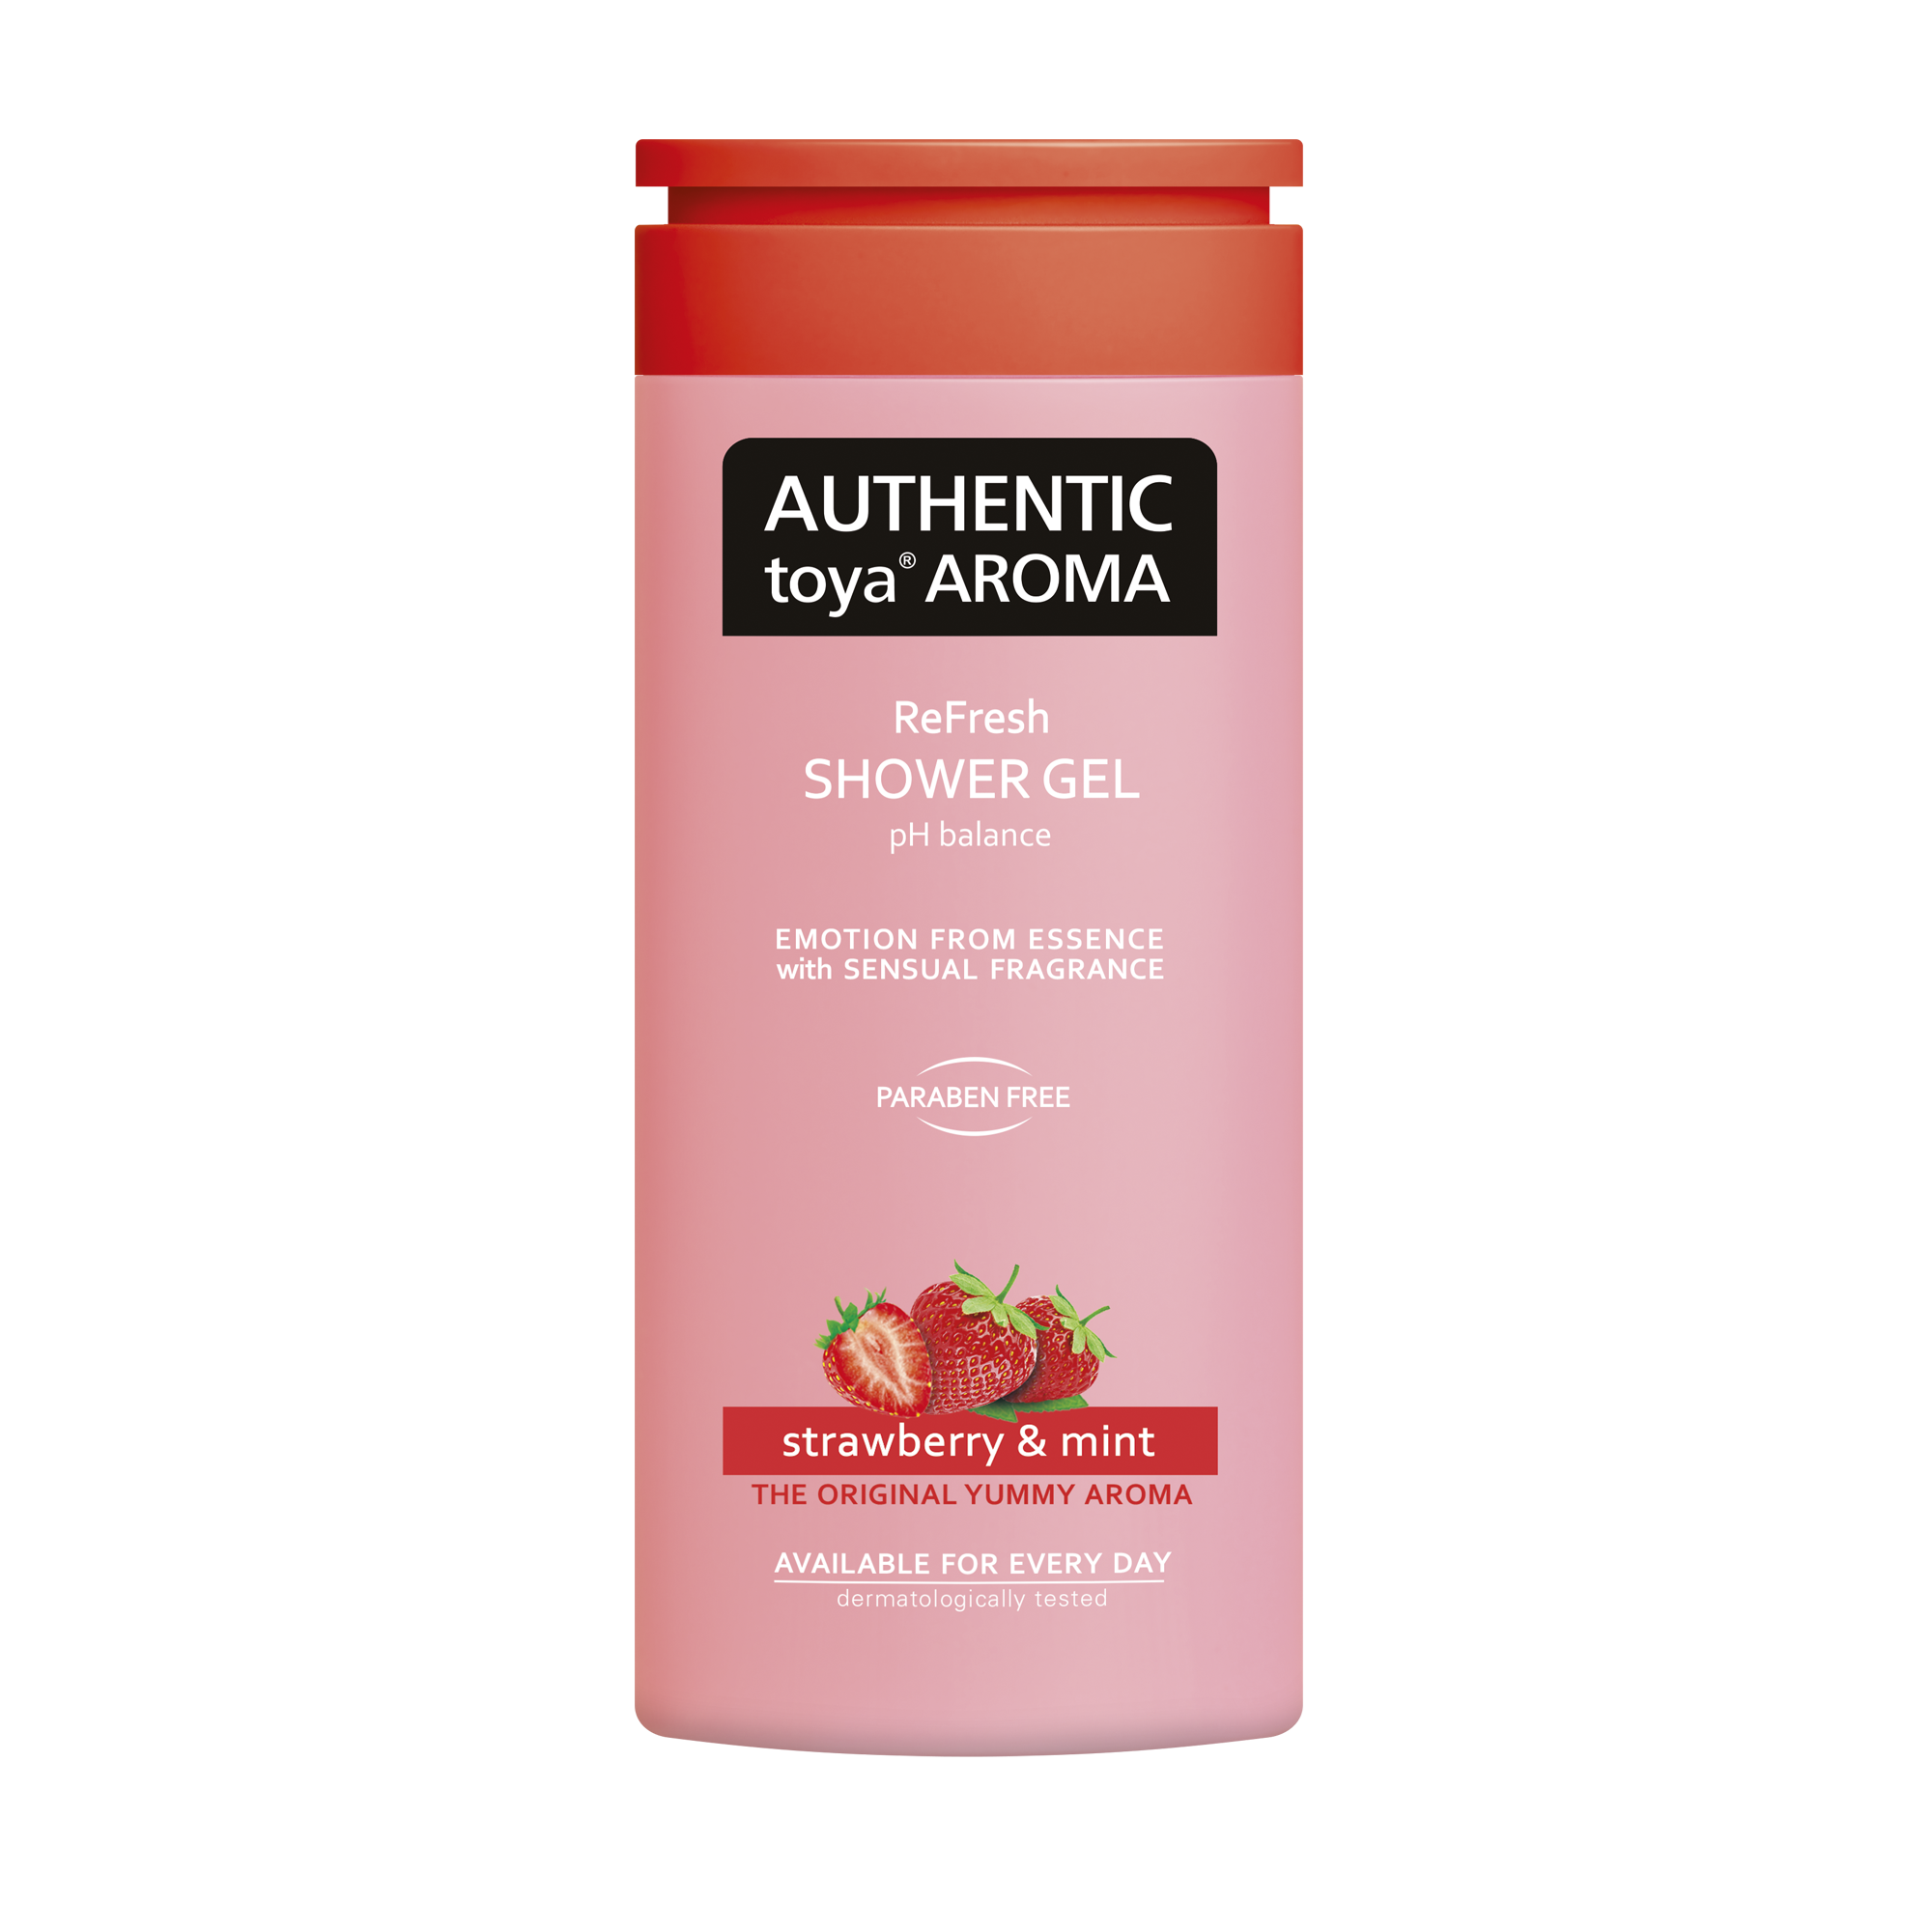 AUTHENTIC toya AROMA – sprchový gel strawberry & mint